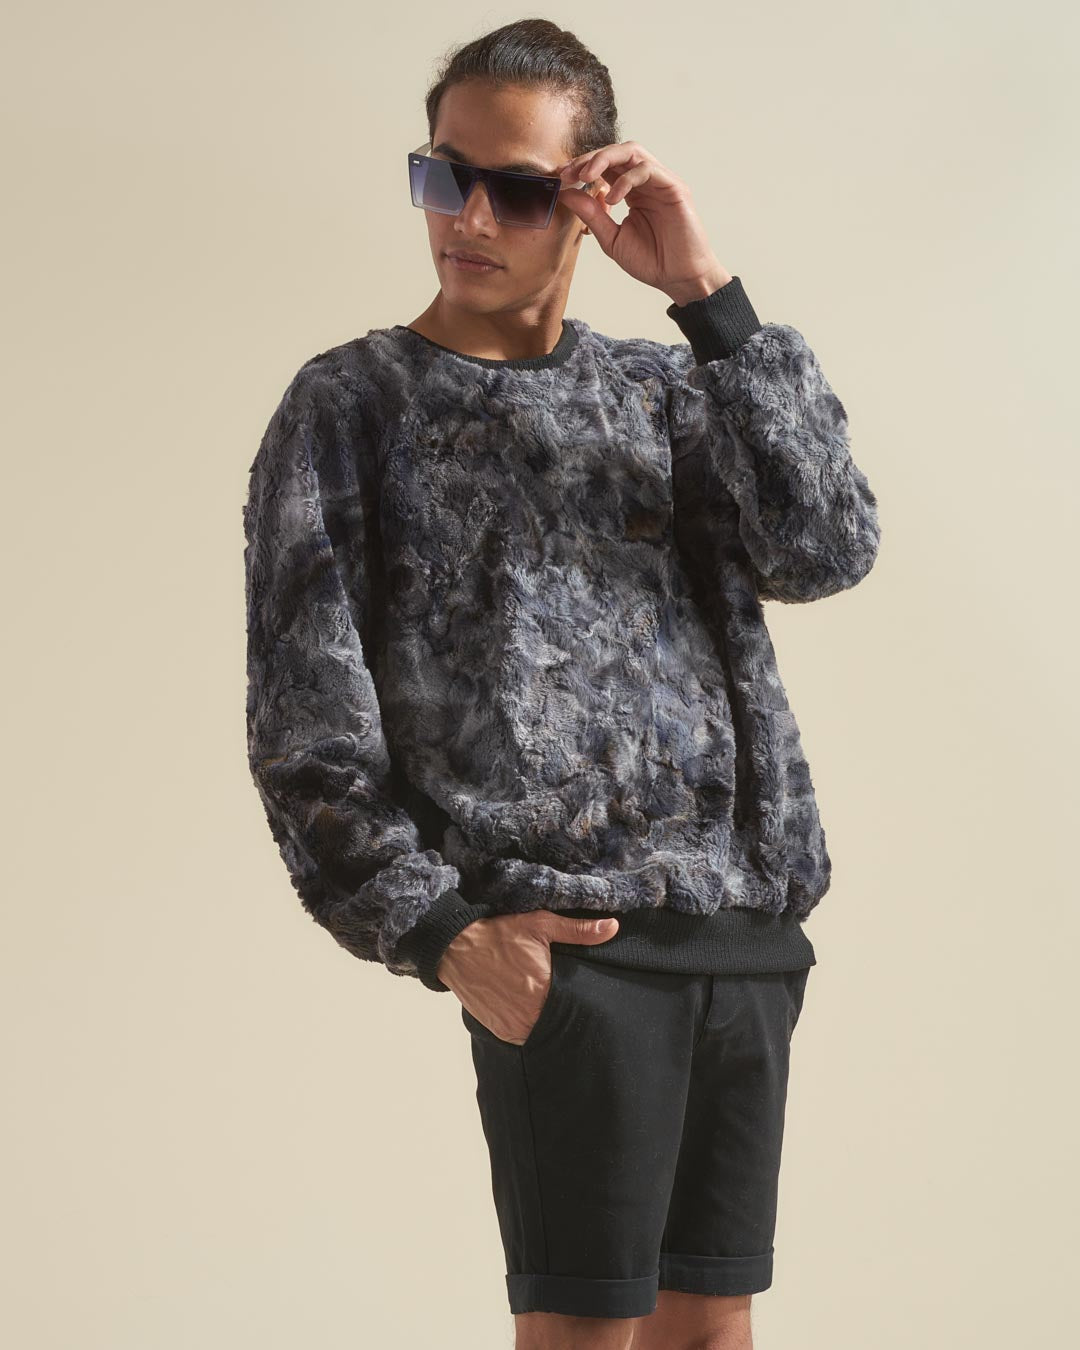 Shark Men's Ultra Soft Faux Fur Sweater